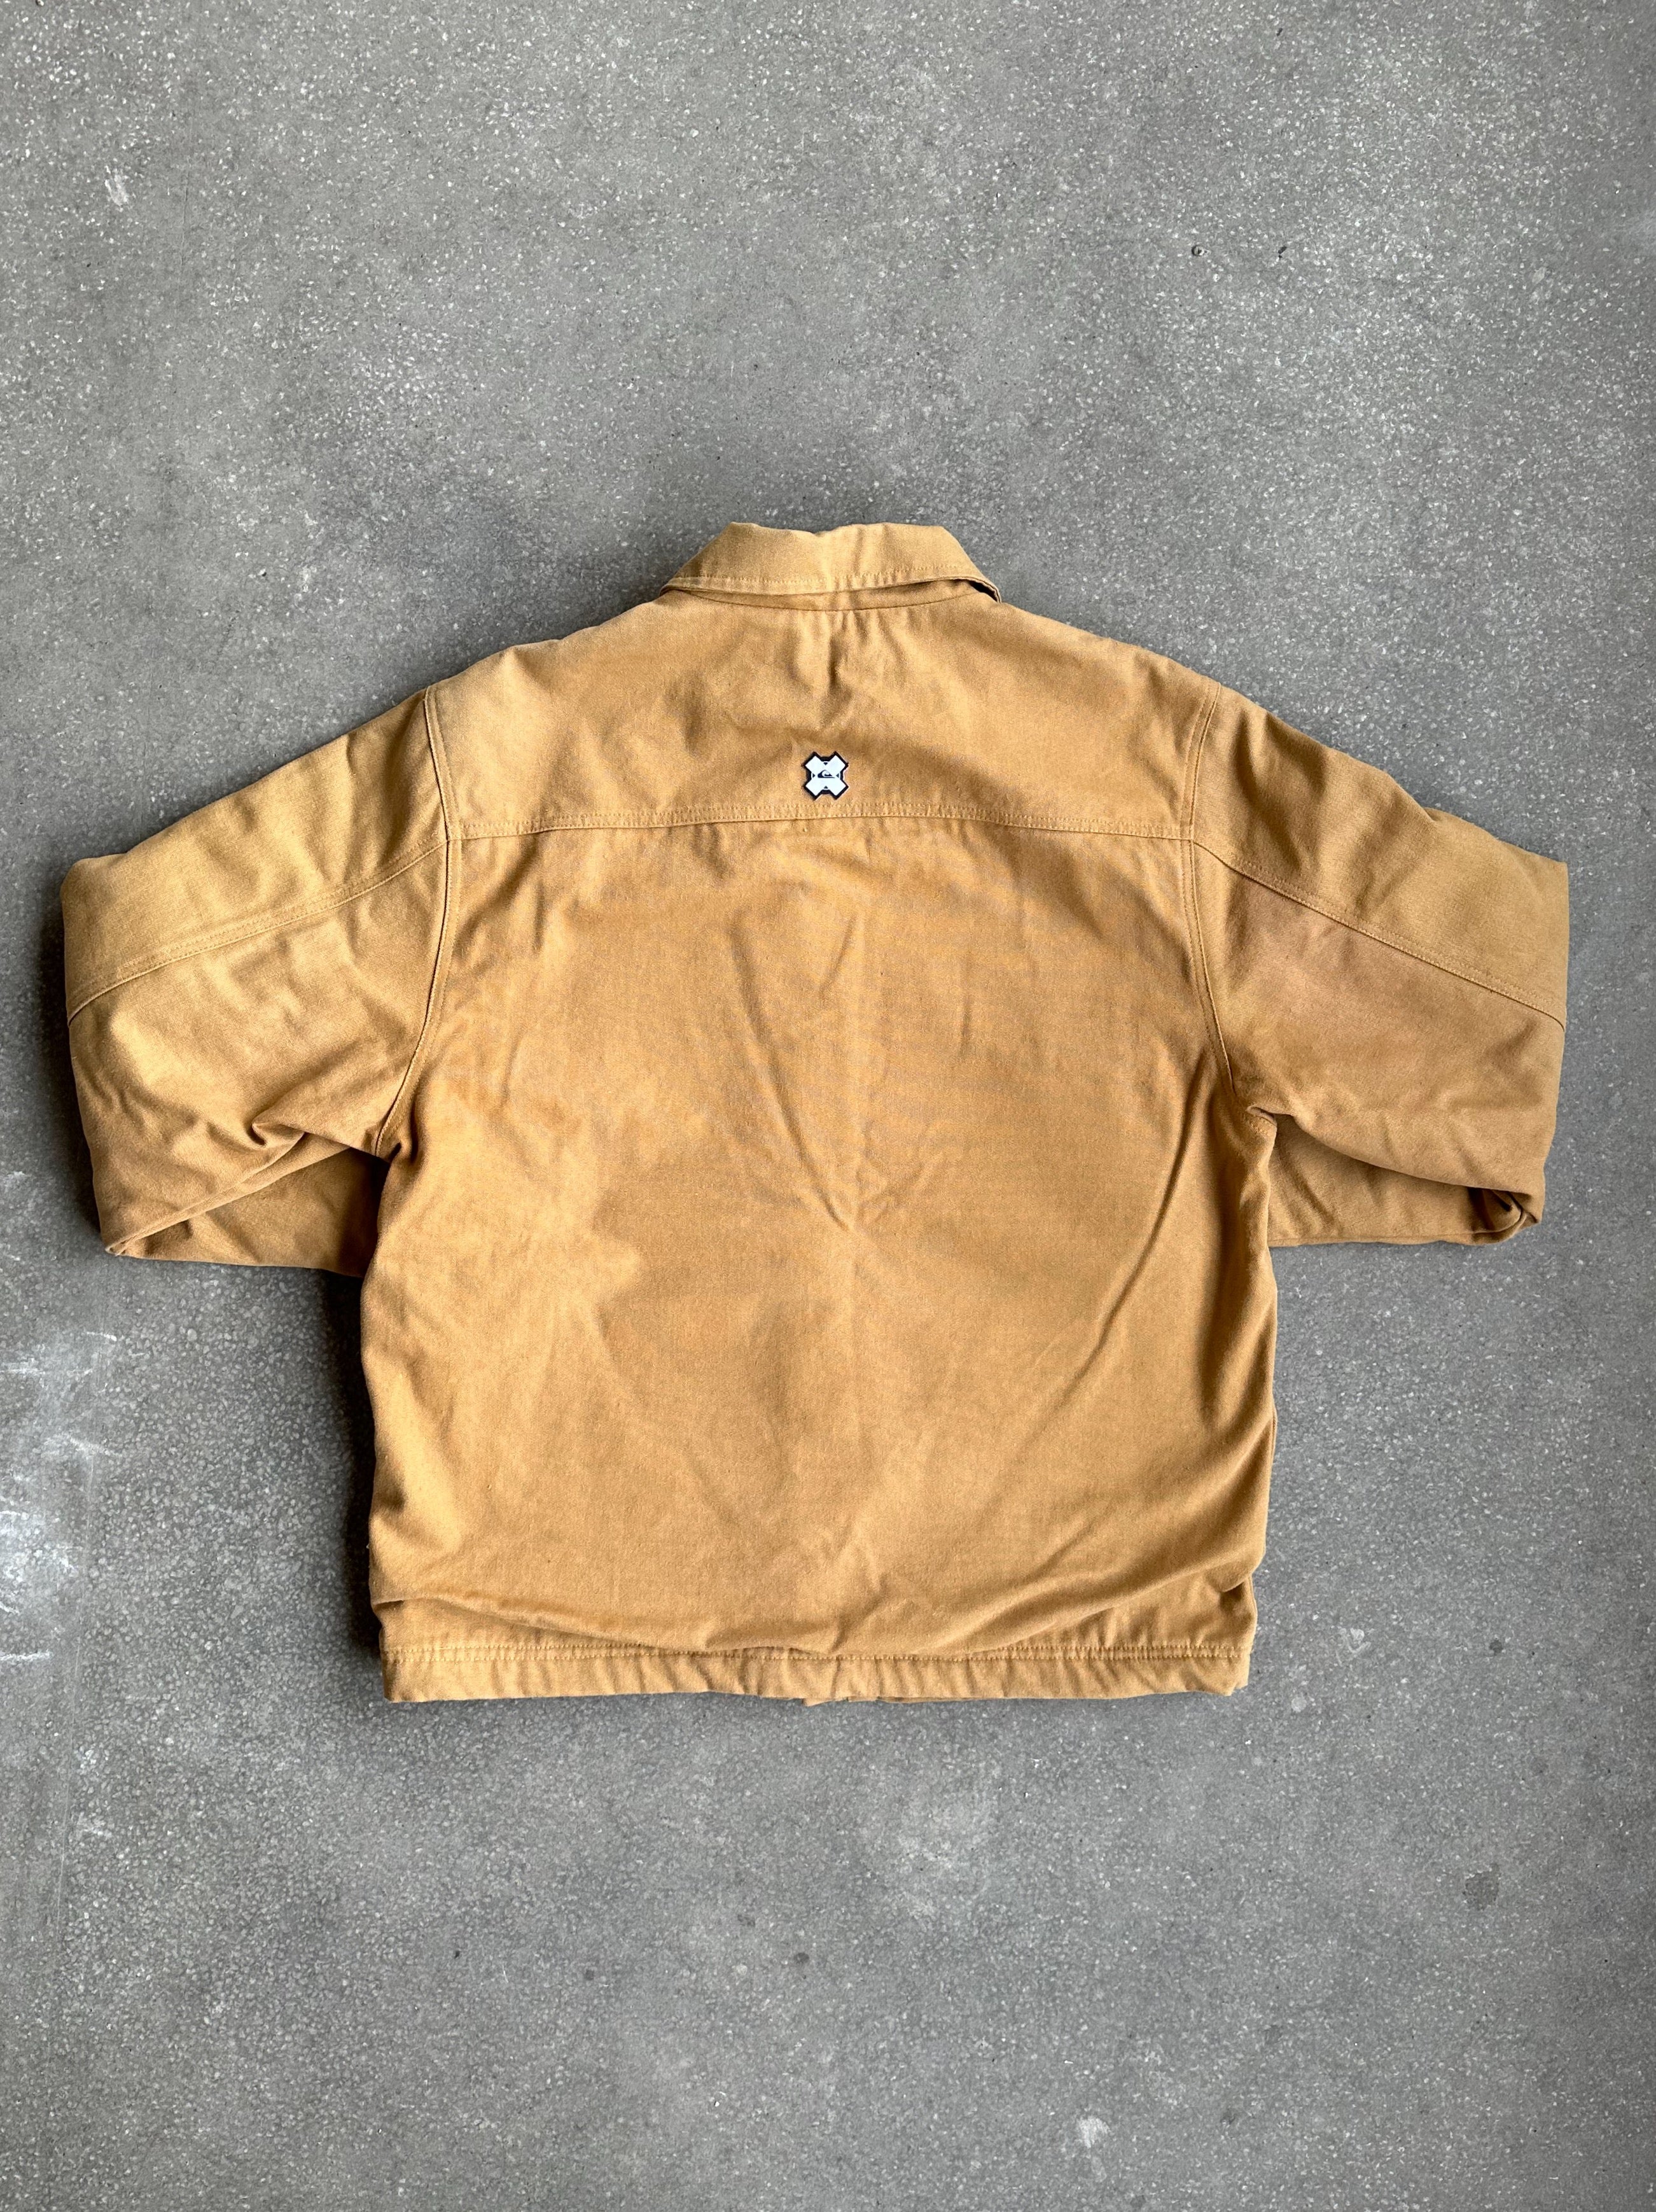 Vintage Quiksilver Workwear Jacket - Large